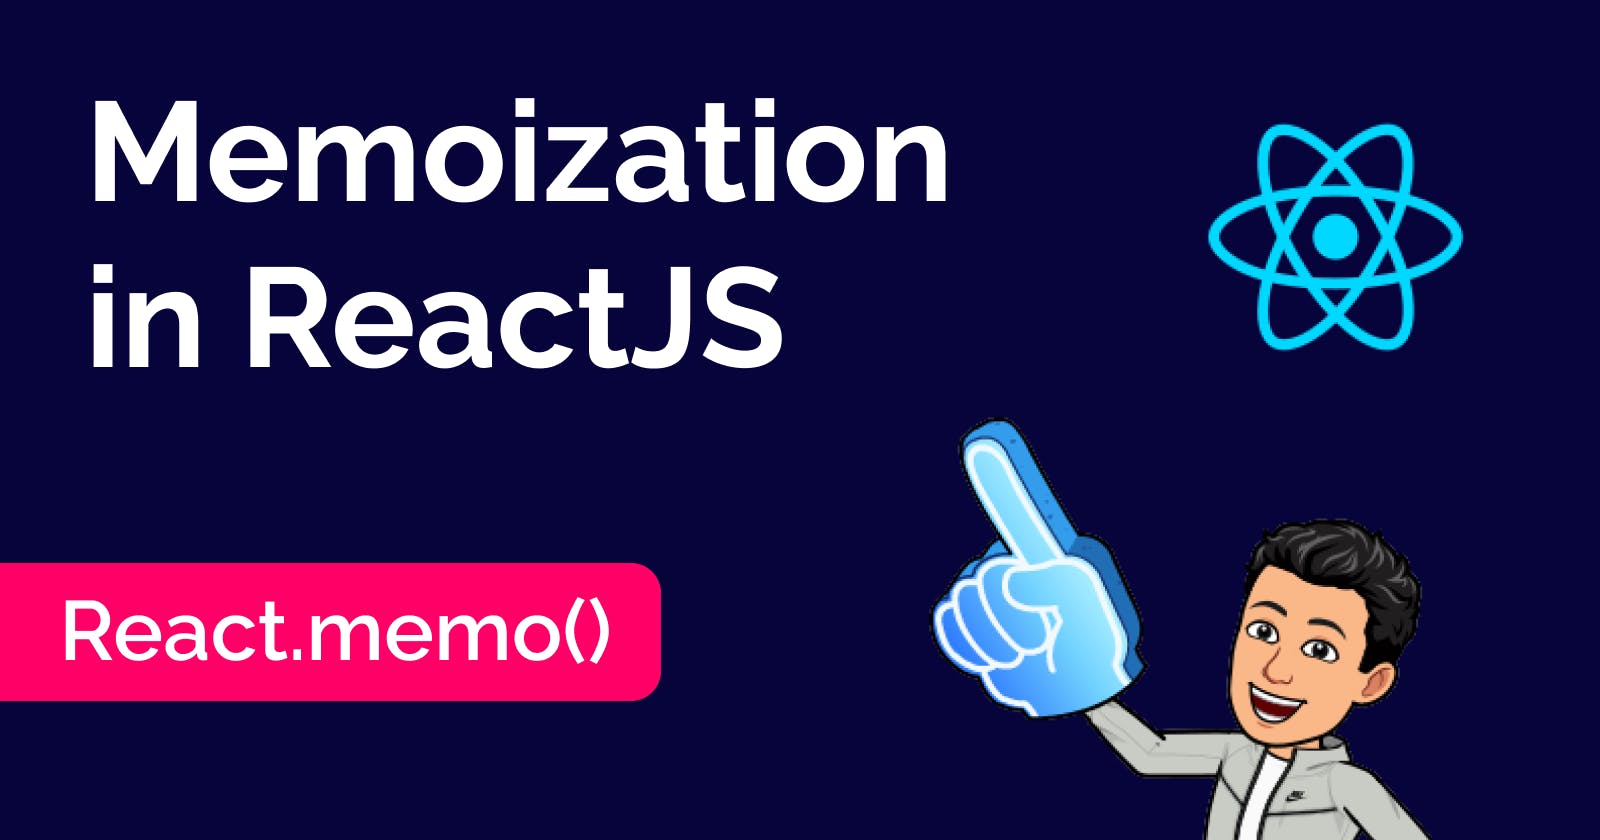 Memoization to improve UI performance in ReactJS